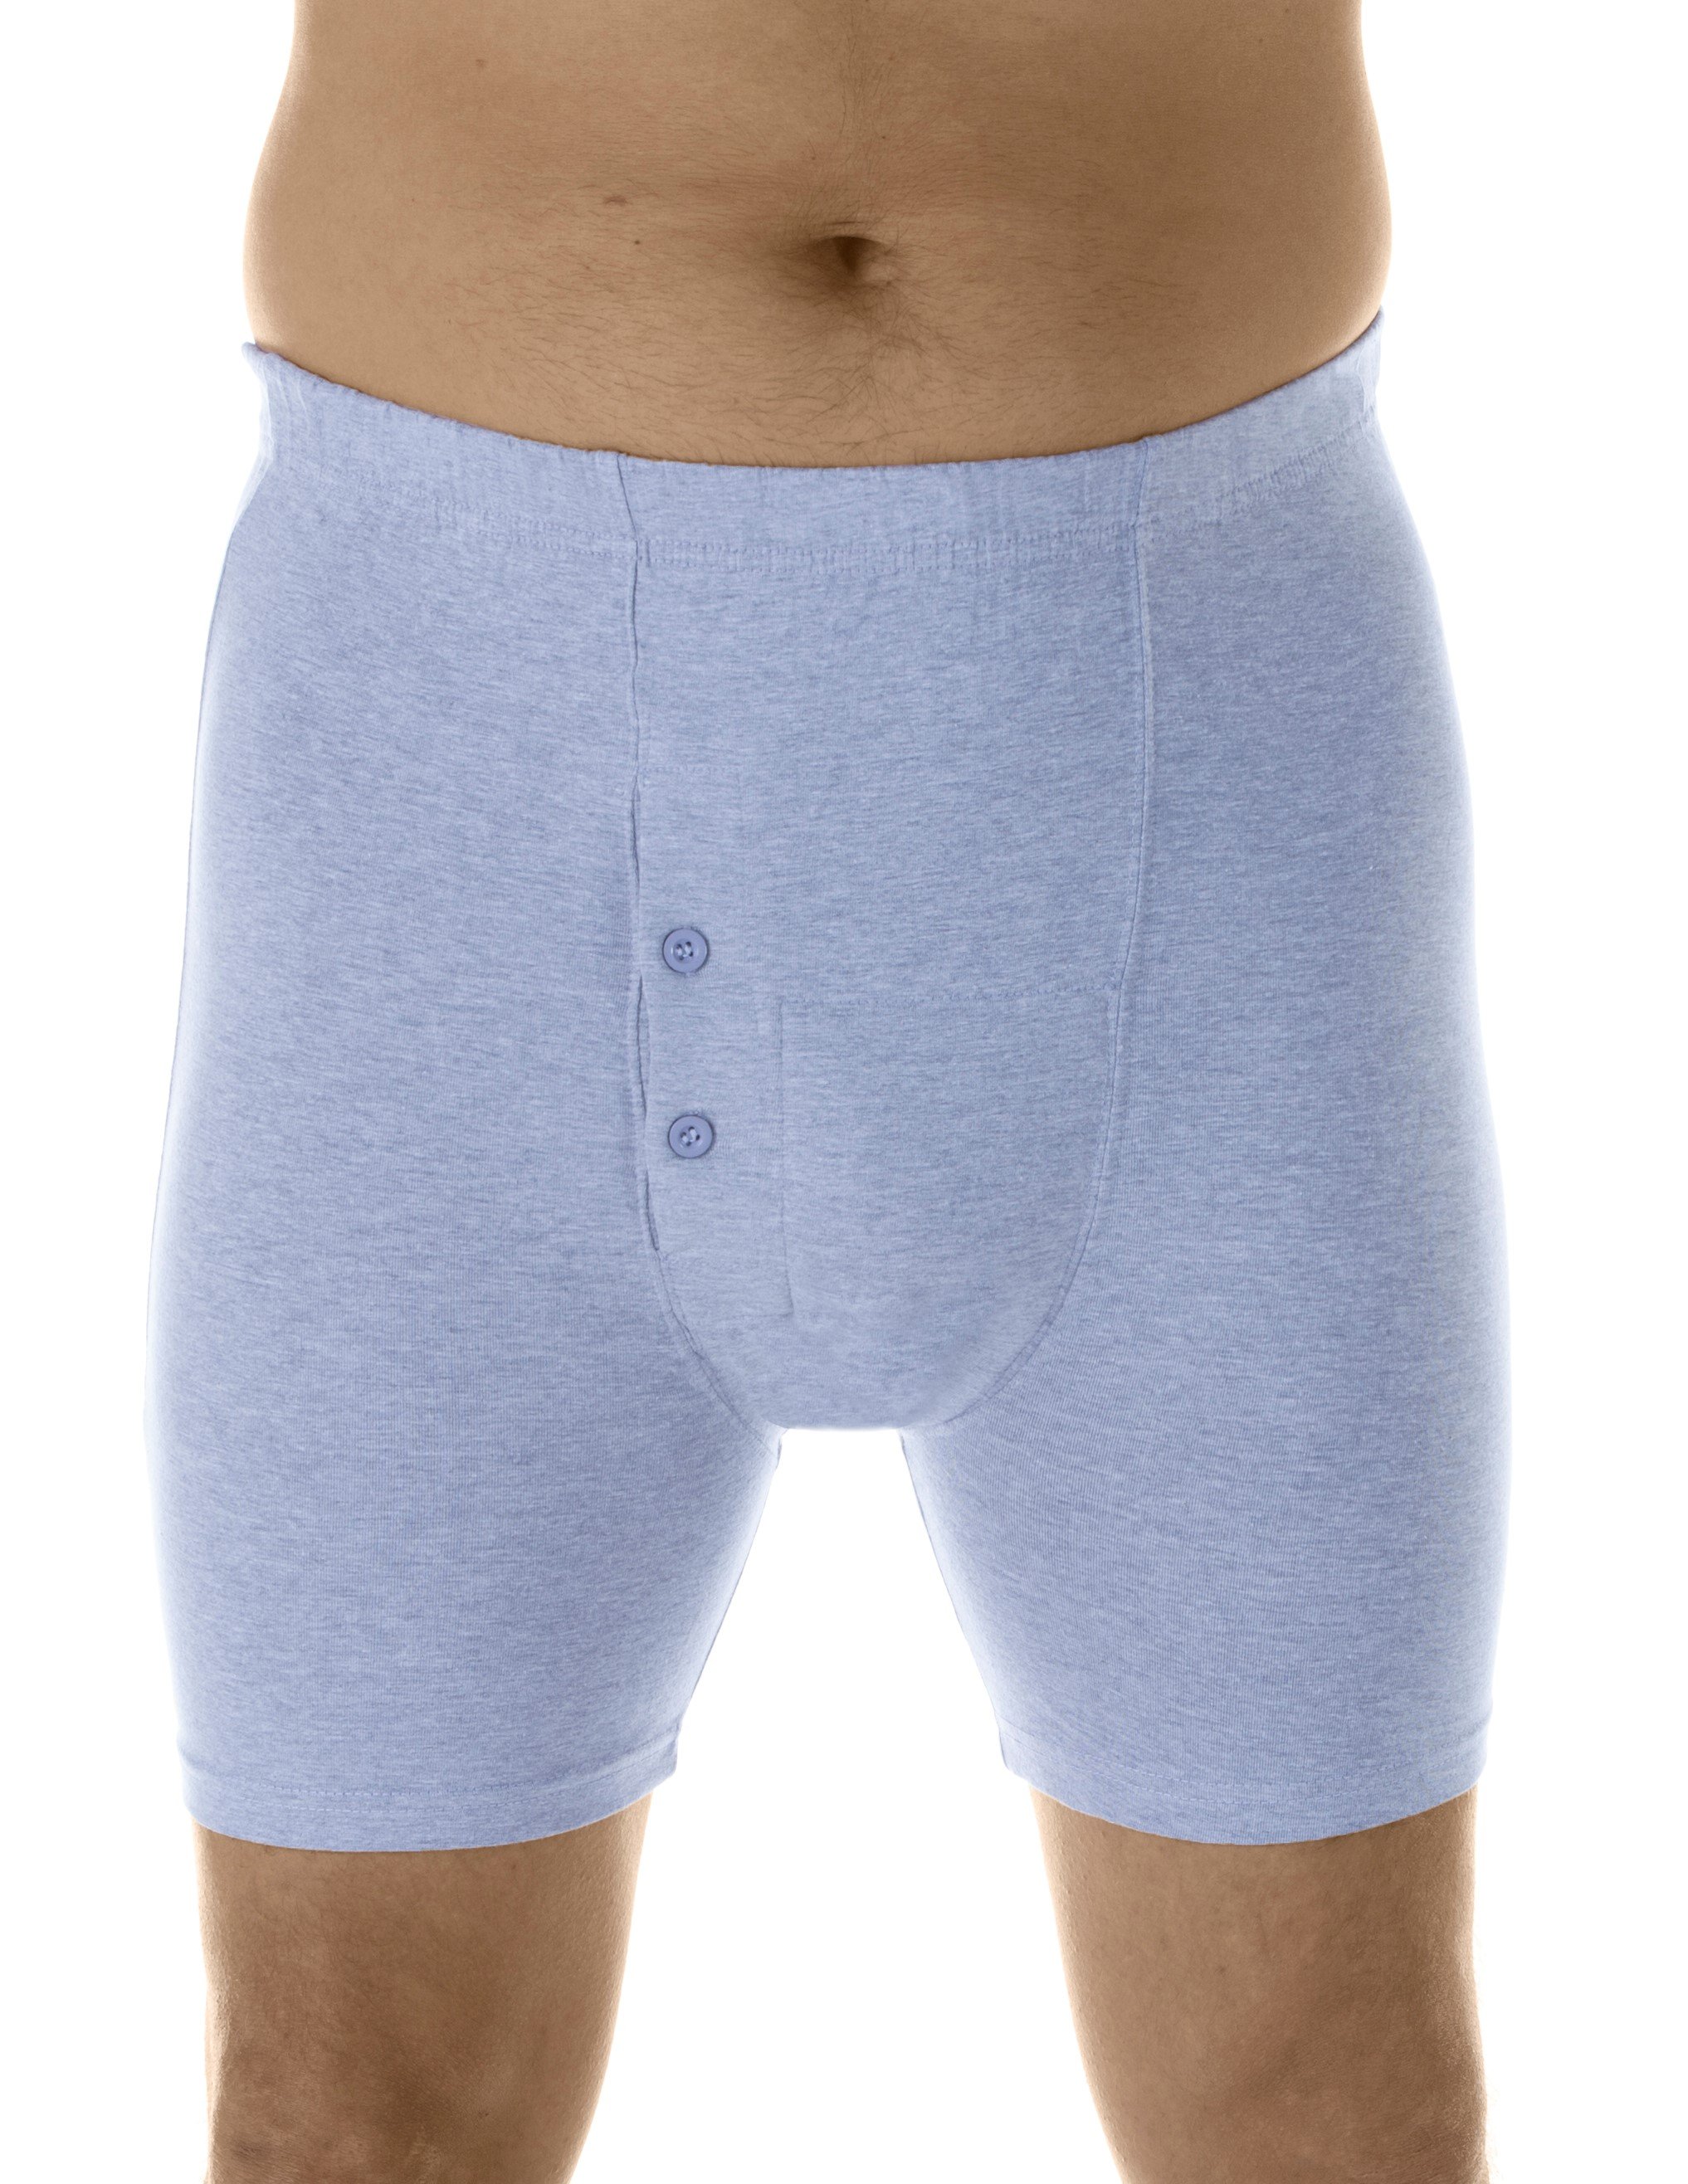 Wearever Men's Incontinence Underwear Open Fly Washable Briefs, Reusable  Single Pair 